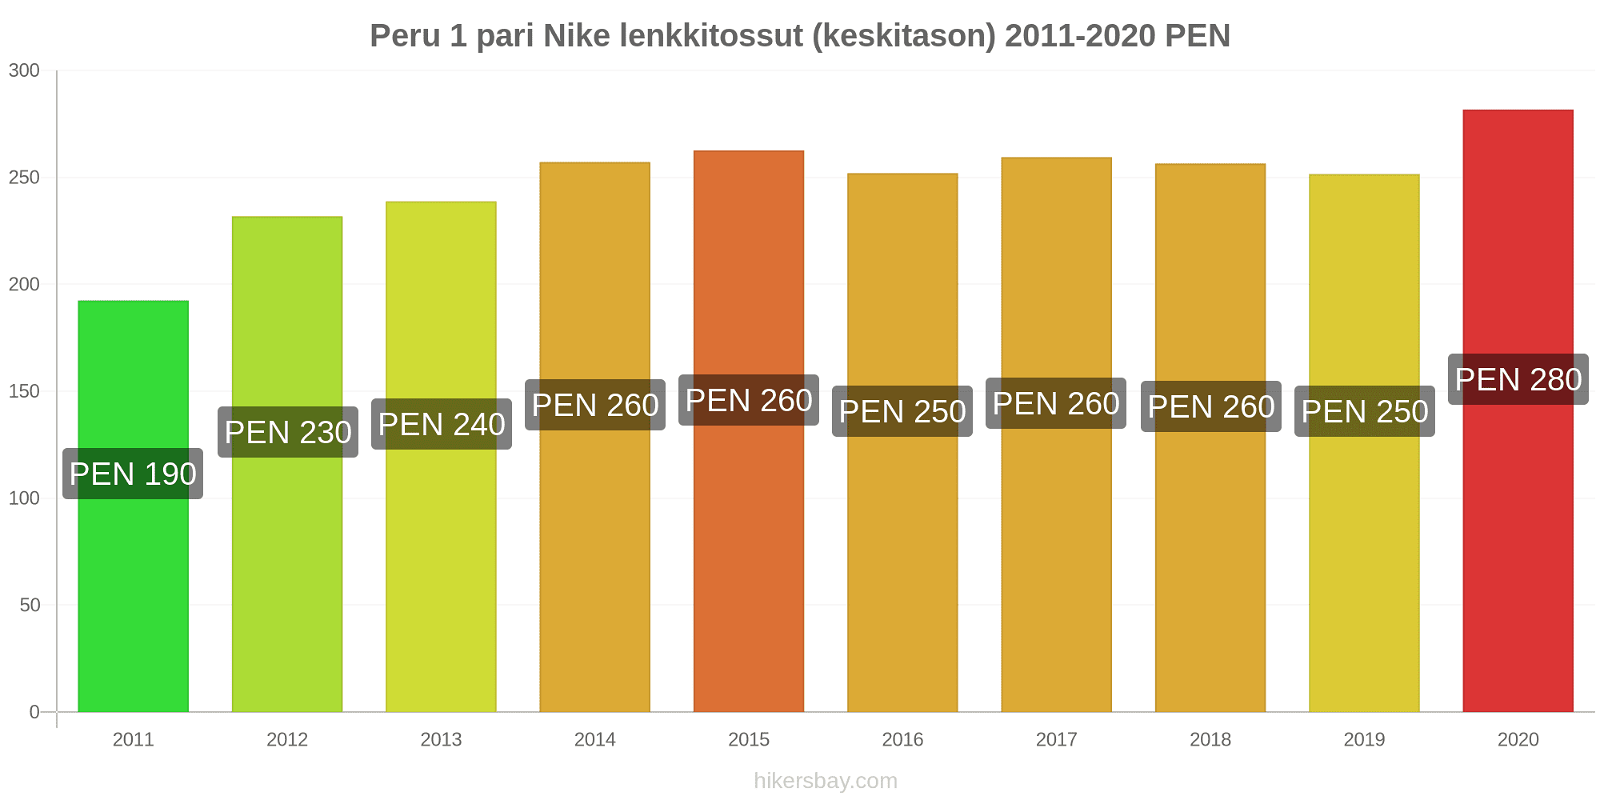 Peru hintojen muutokset 1 pari Nike lenkkitossut (keskitason) hikersbay.com